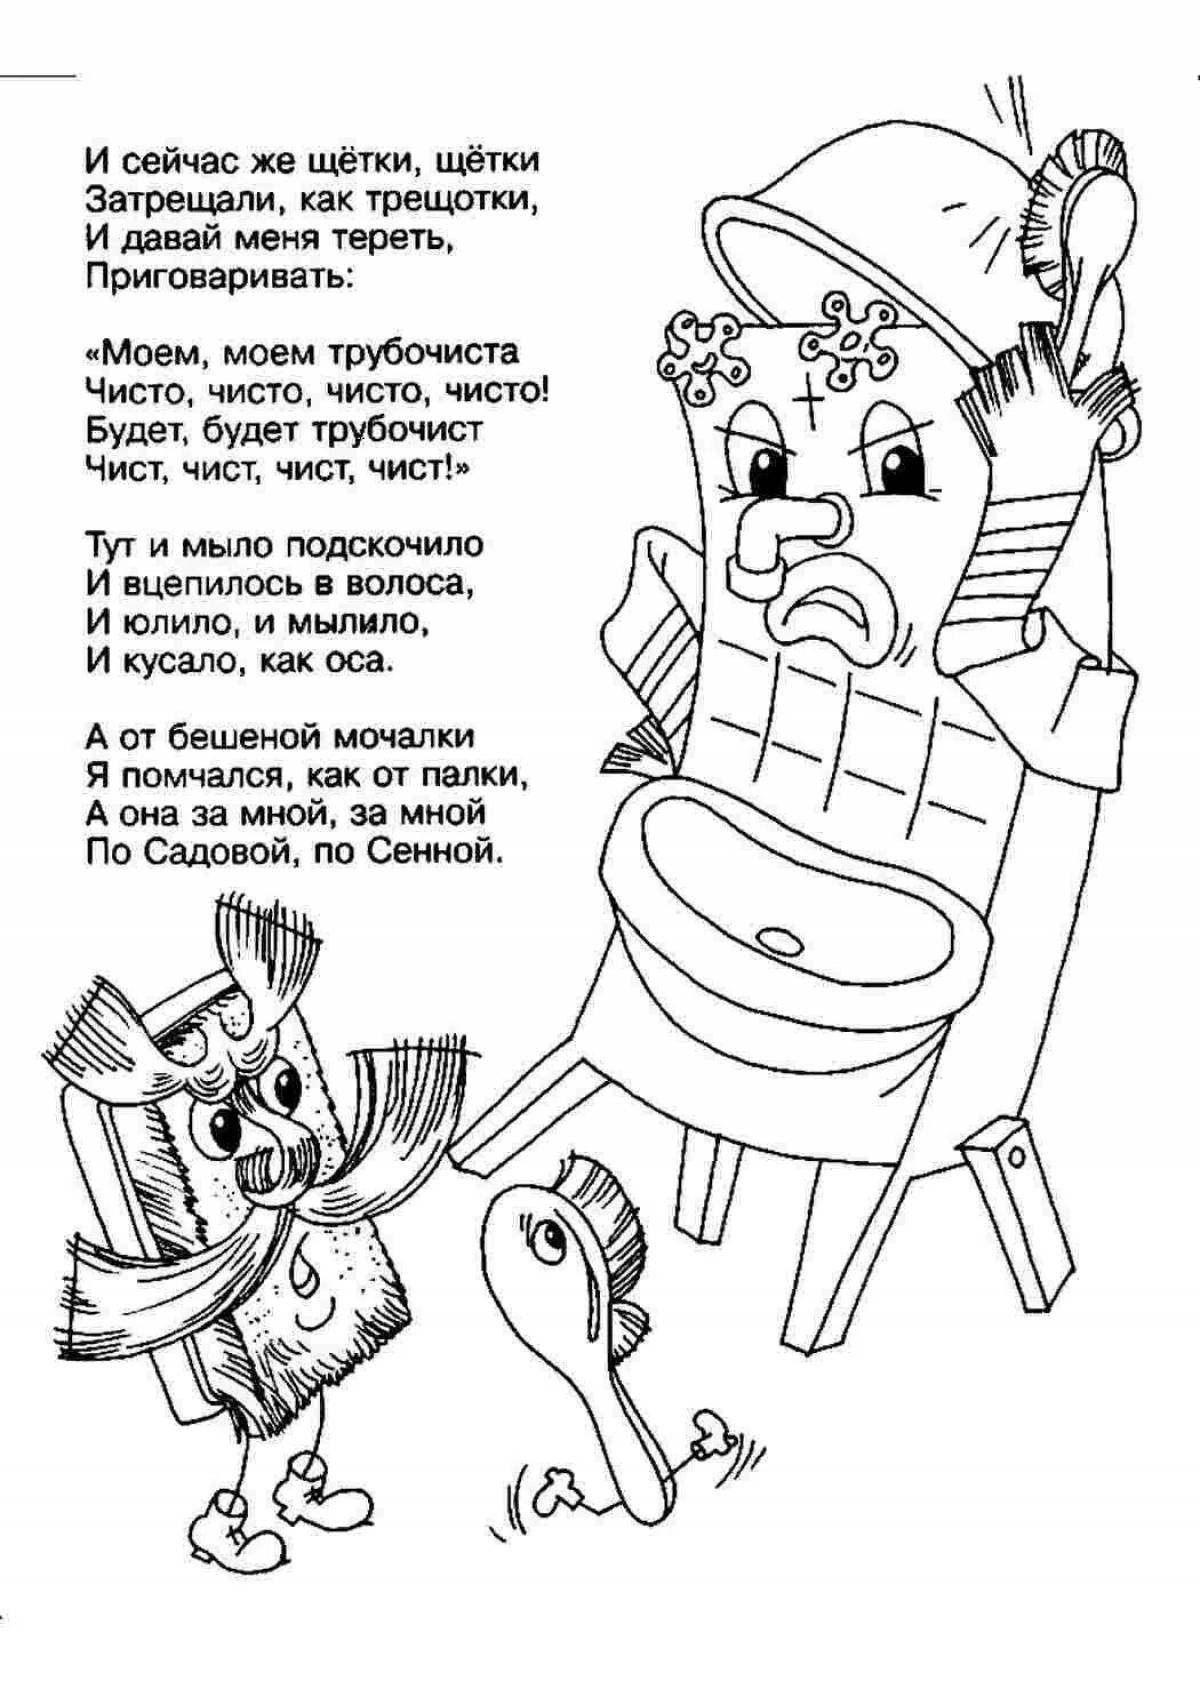 Delightful Moidodyr Chukovsky coloring book